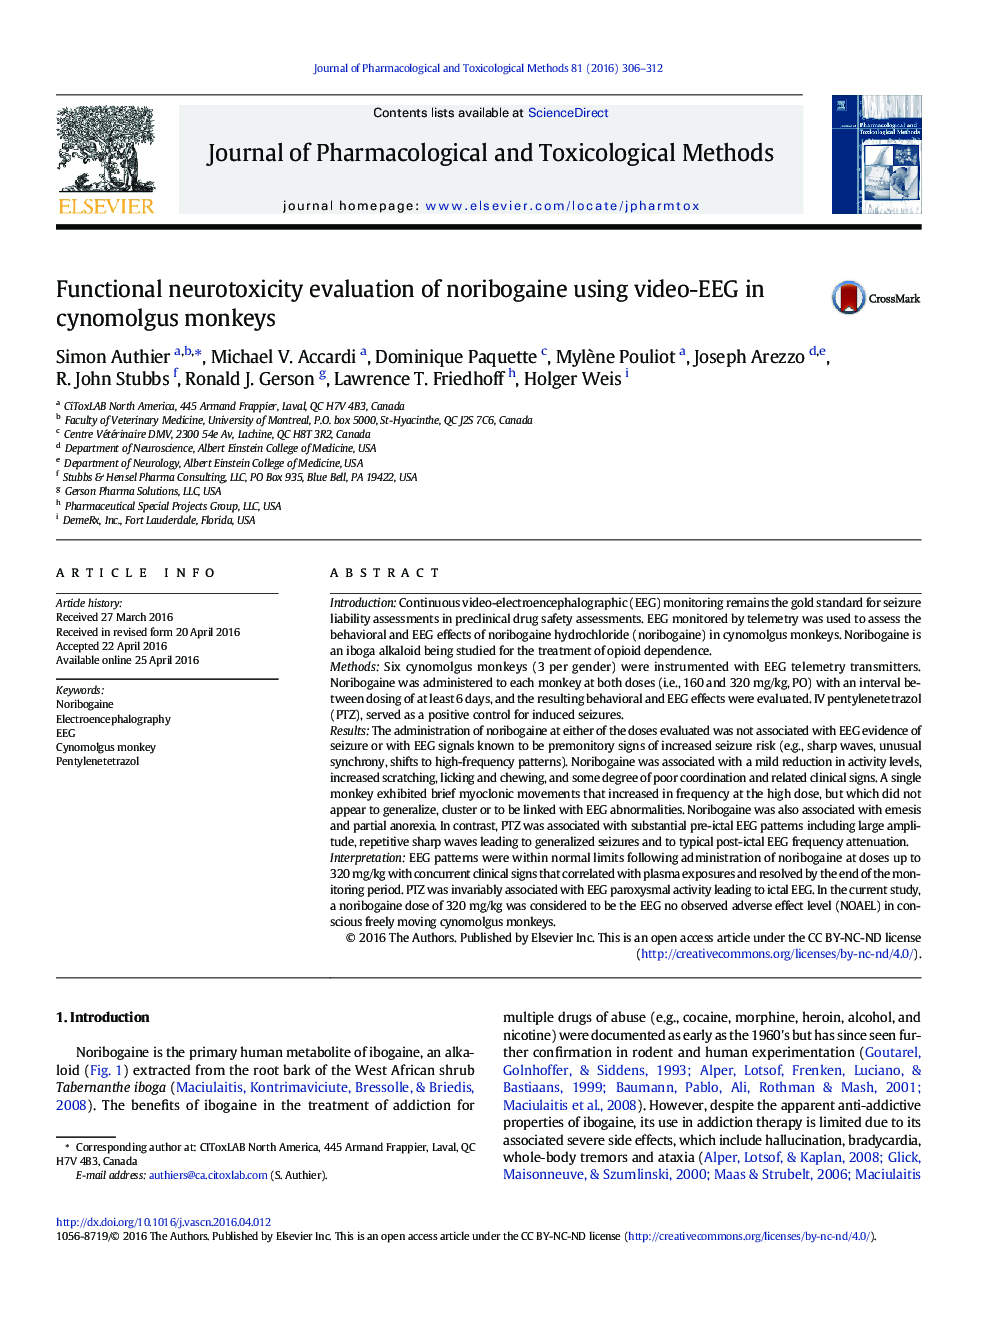 Functional neurotoxicity evaluation of noribogaine using video-EEG in cynomolgus monkeys